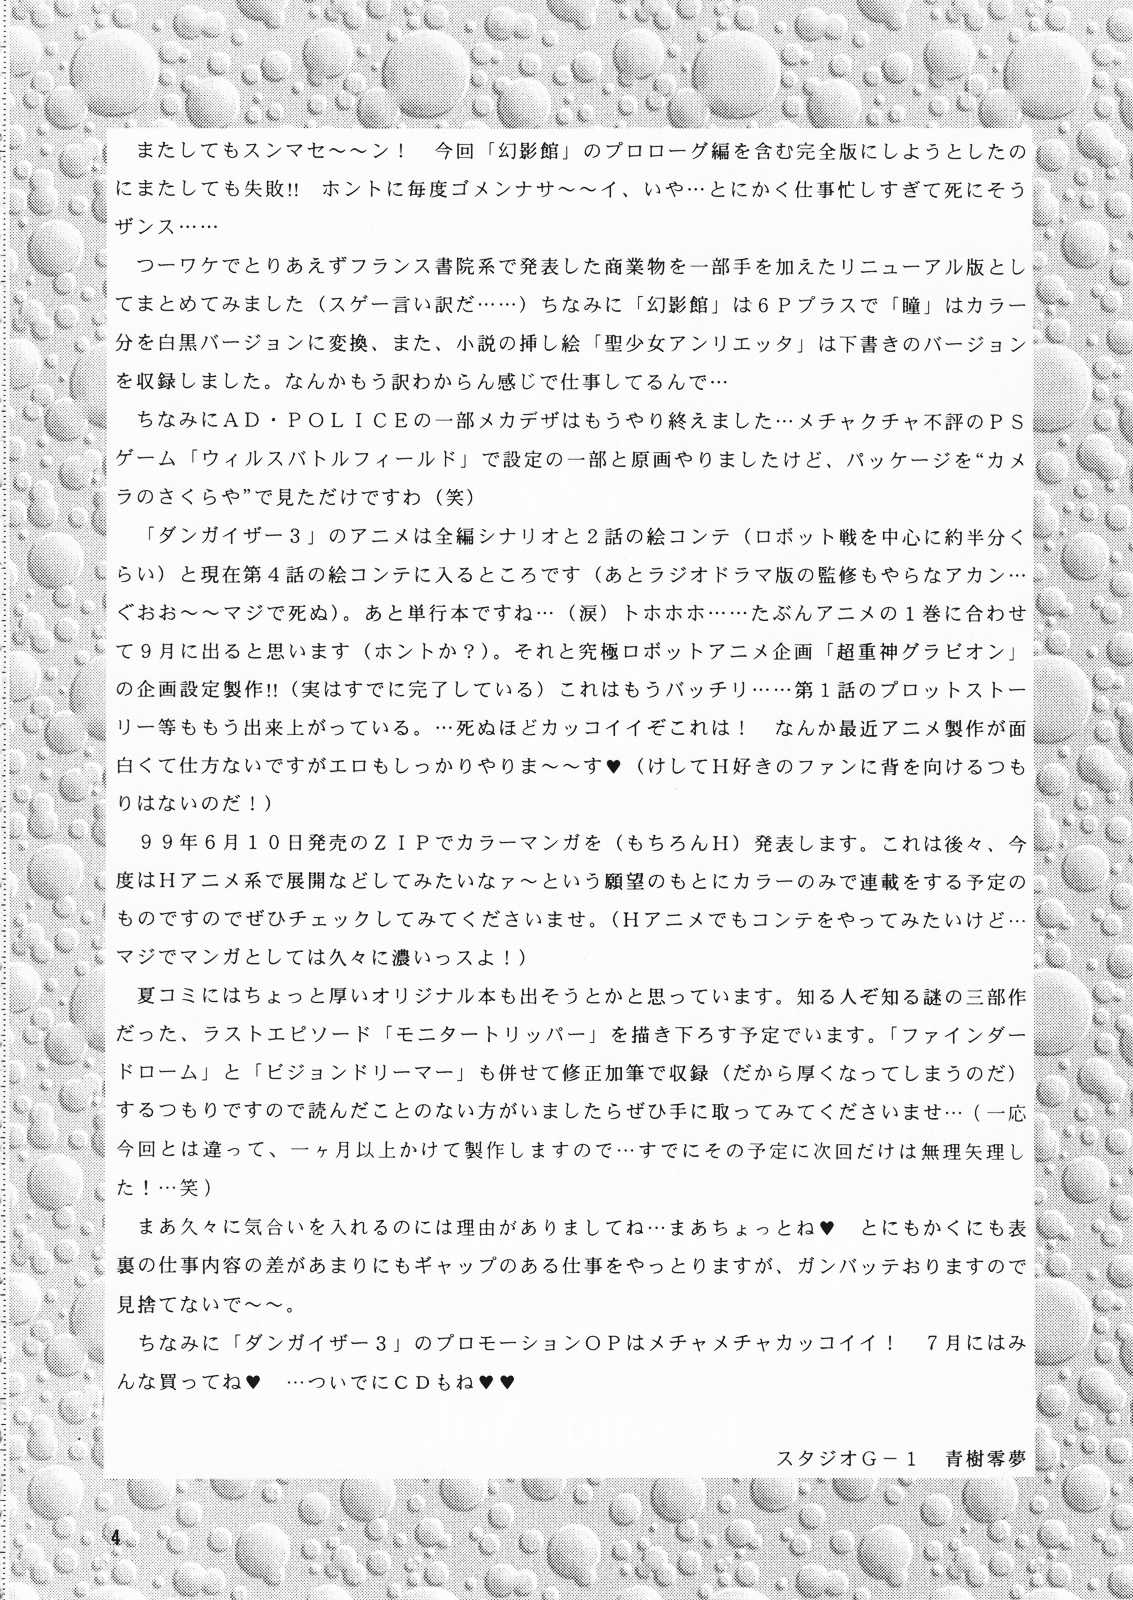 [Megami Kyouten] geneikan ex version α [女神教典] 幻影館 EX version α